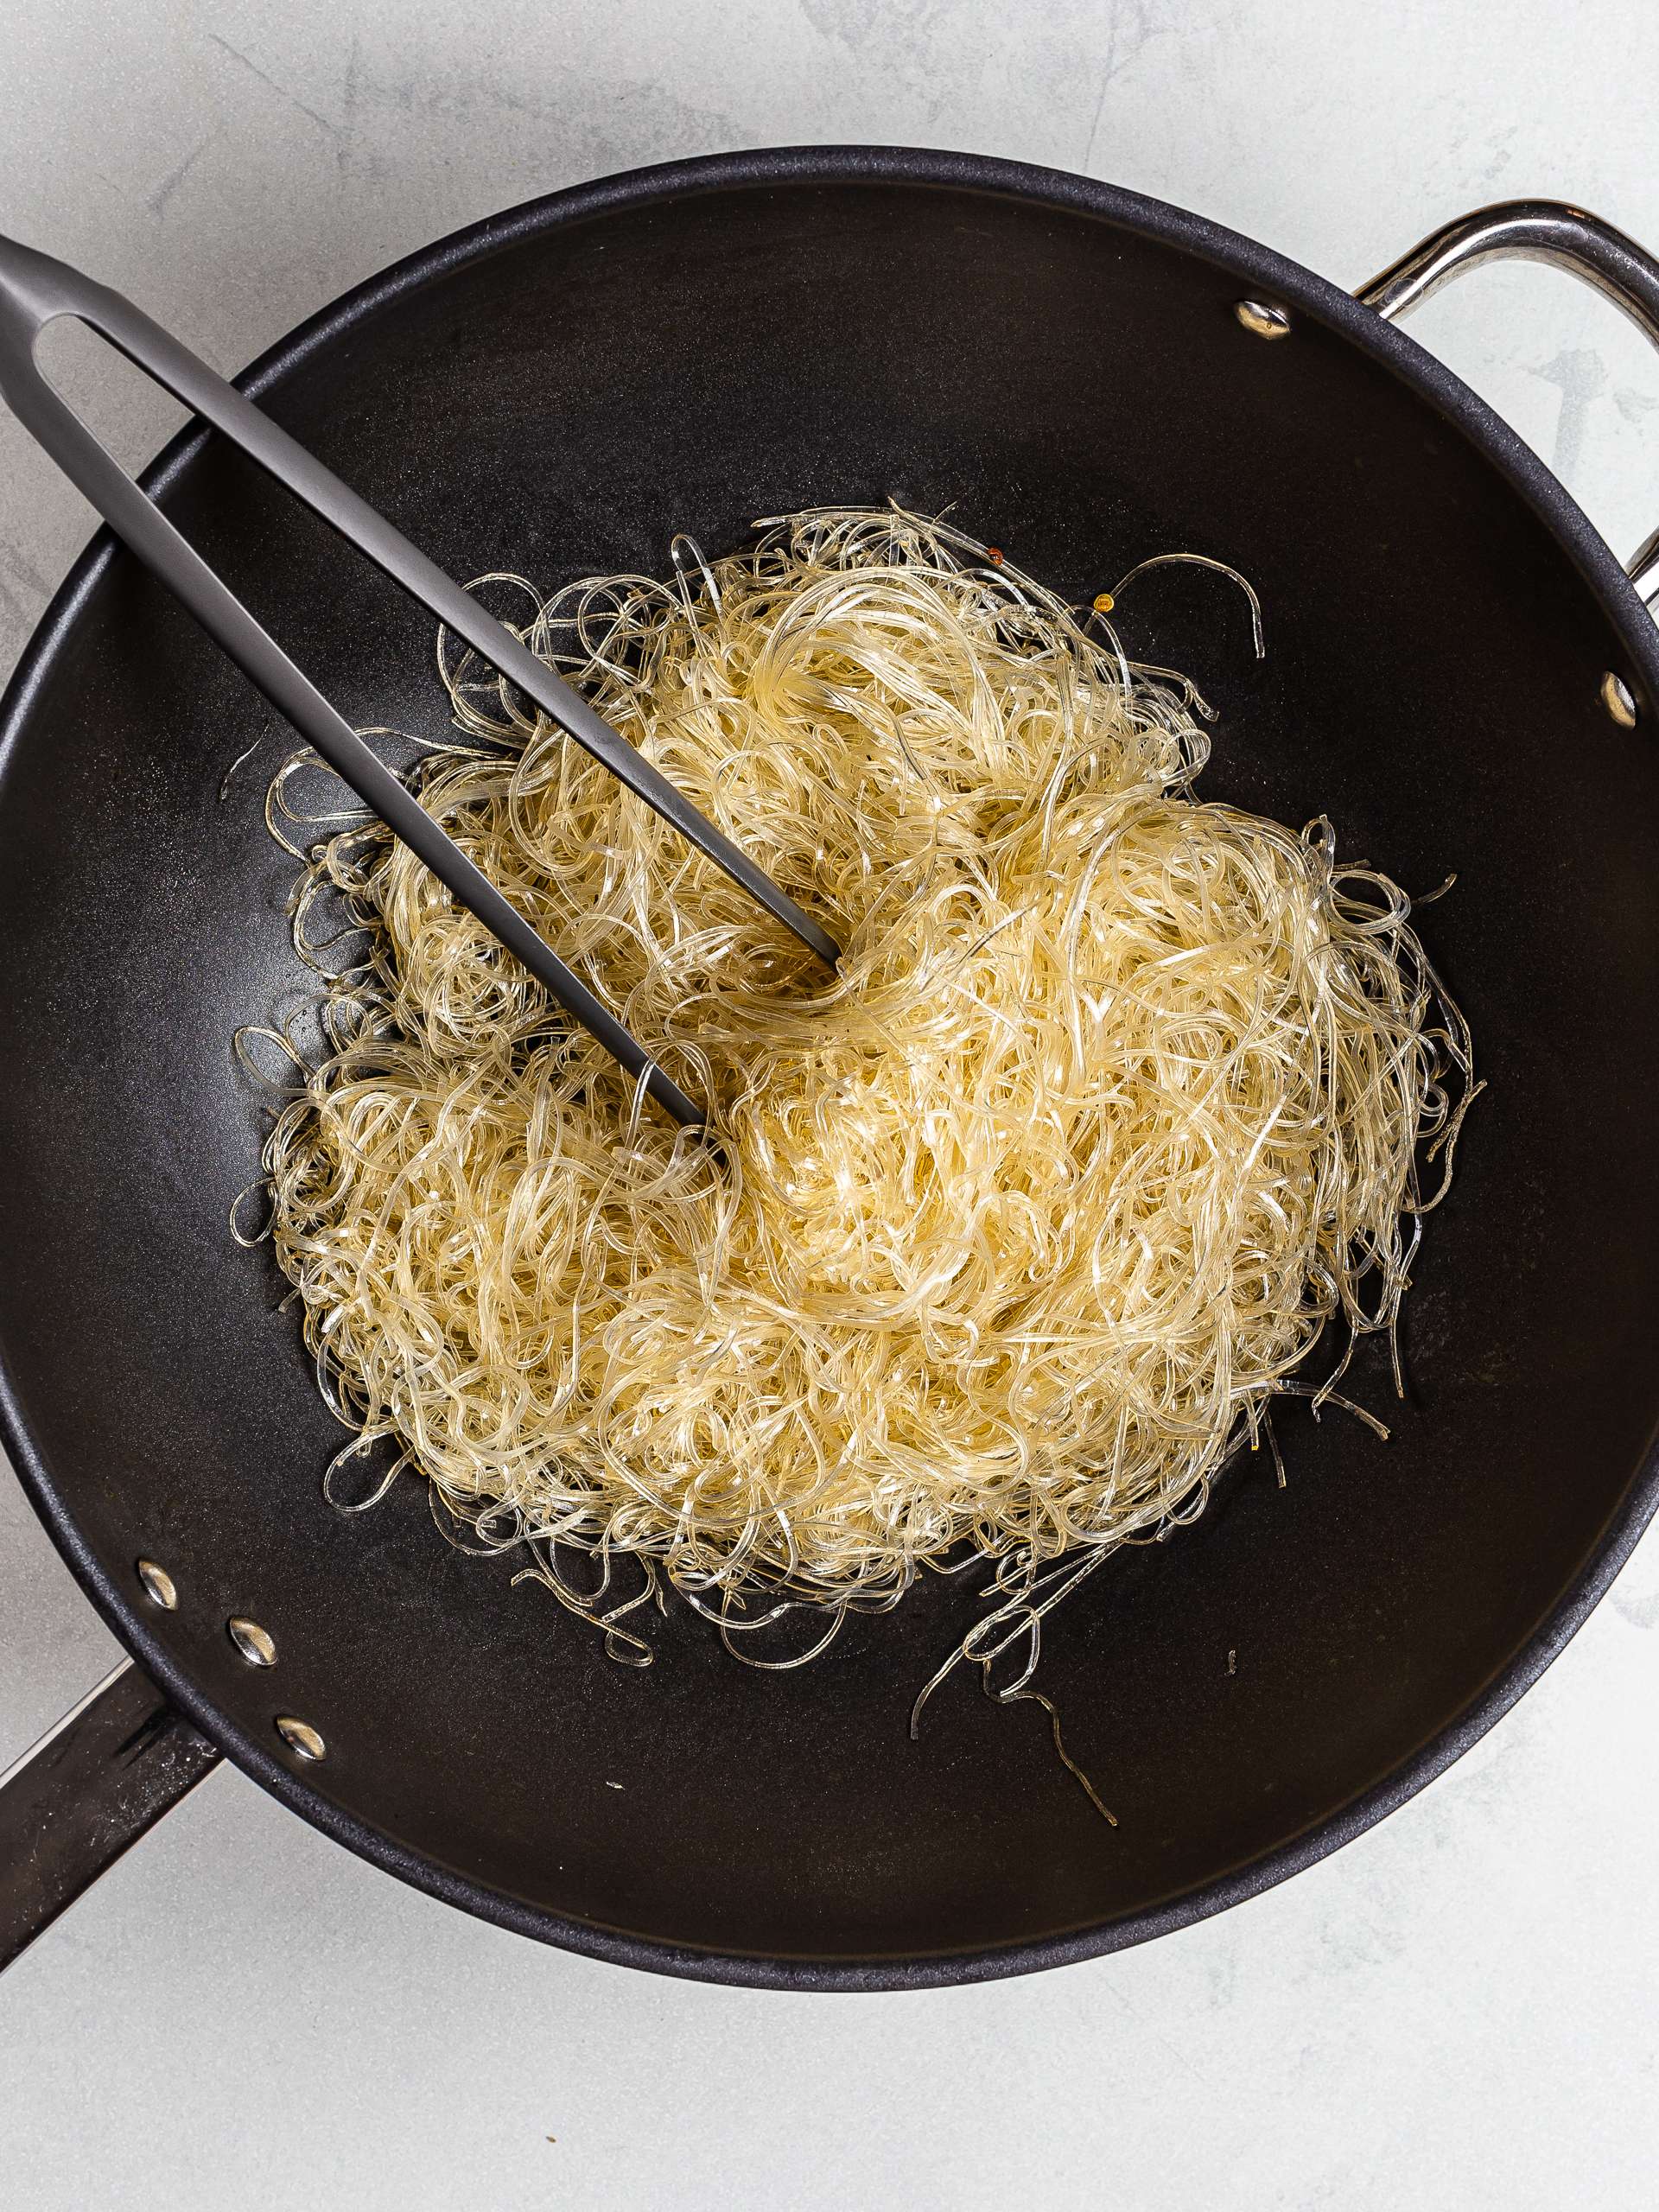 Glass noodles stir fried in a wok